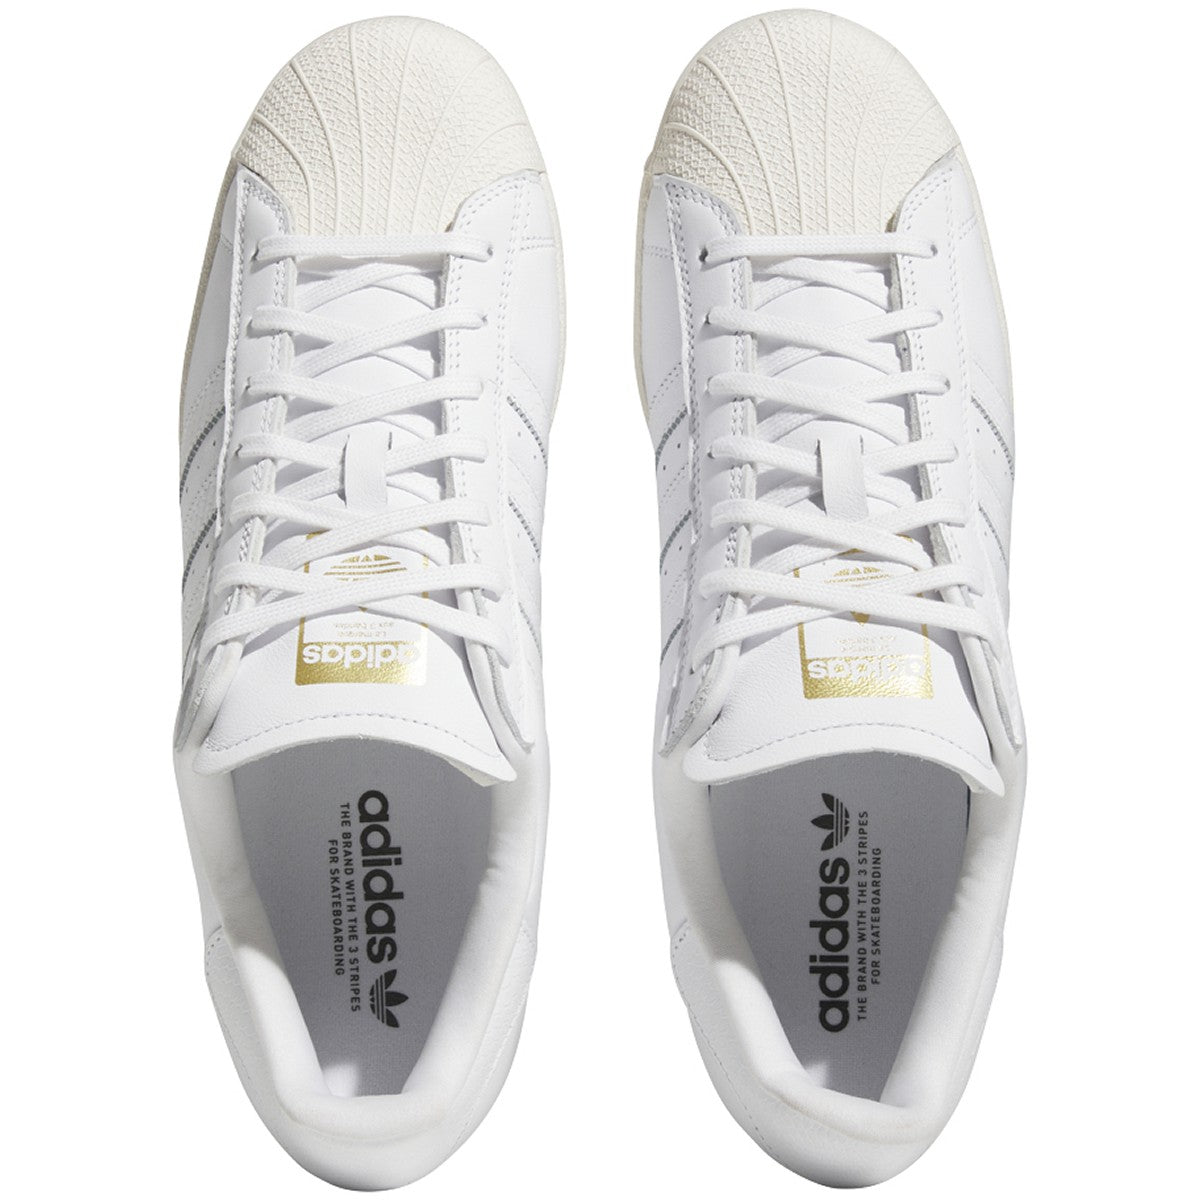 White/White Superstar ADV Adidas Skate Shoe Top